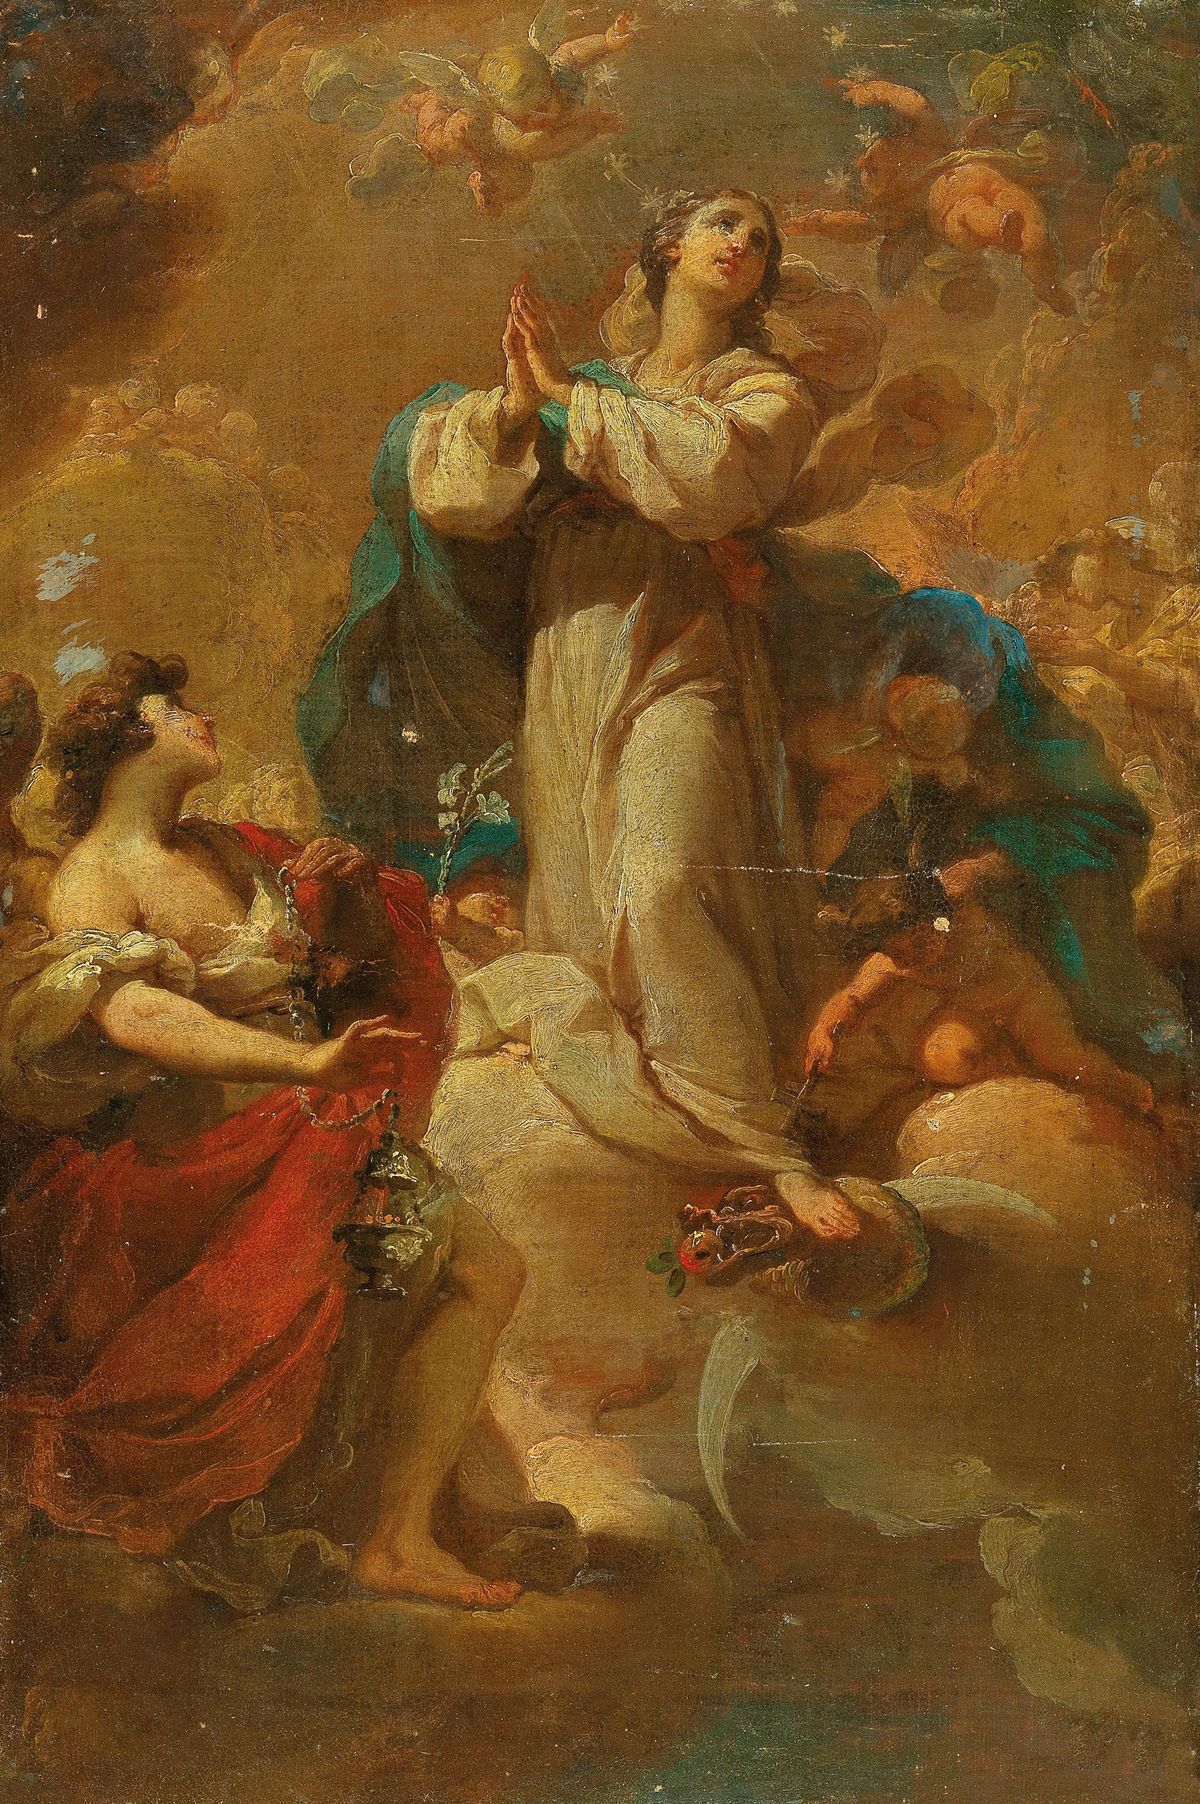 The Immaculate Conception with Angels (1728-1781) by Ubaldo Gandolfi - Public Domain Catholic Painting